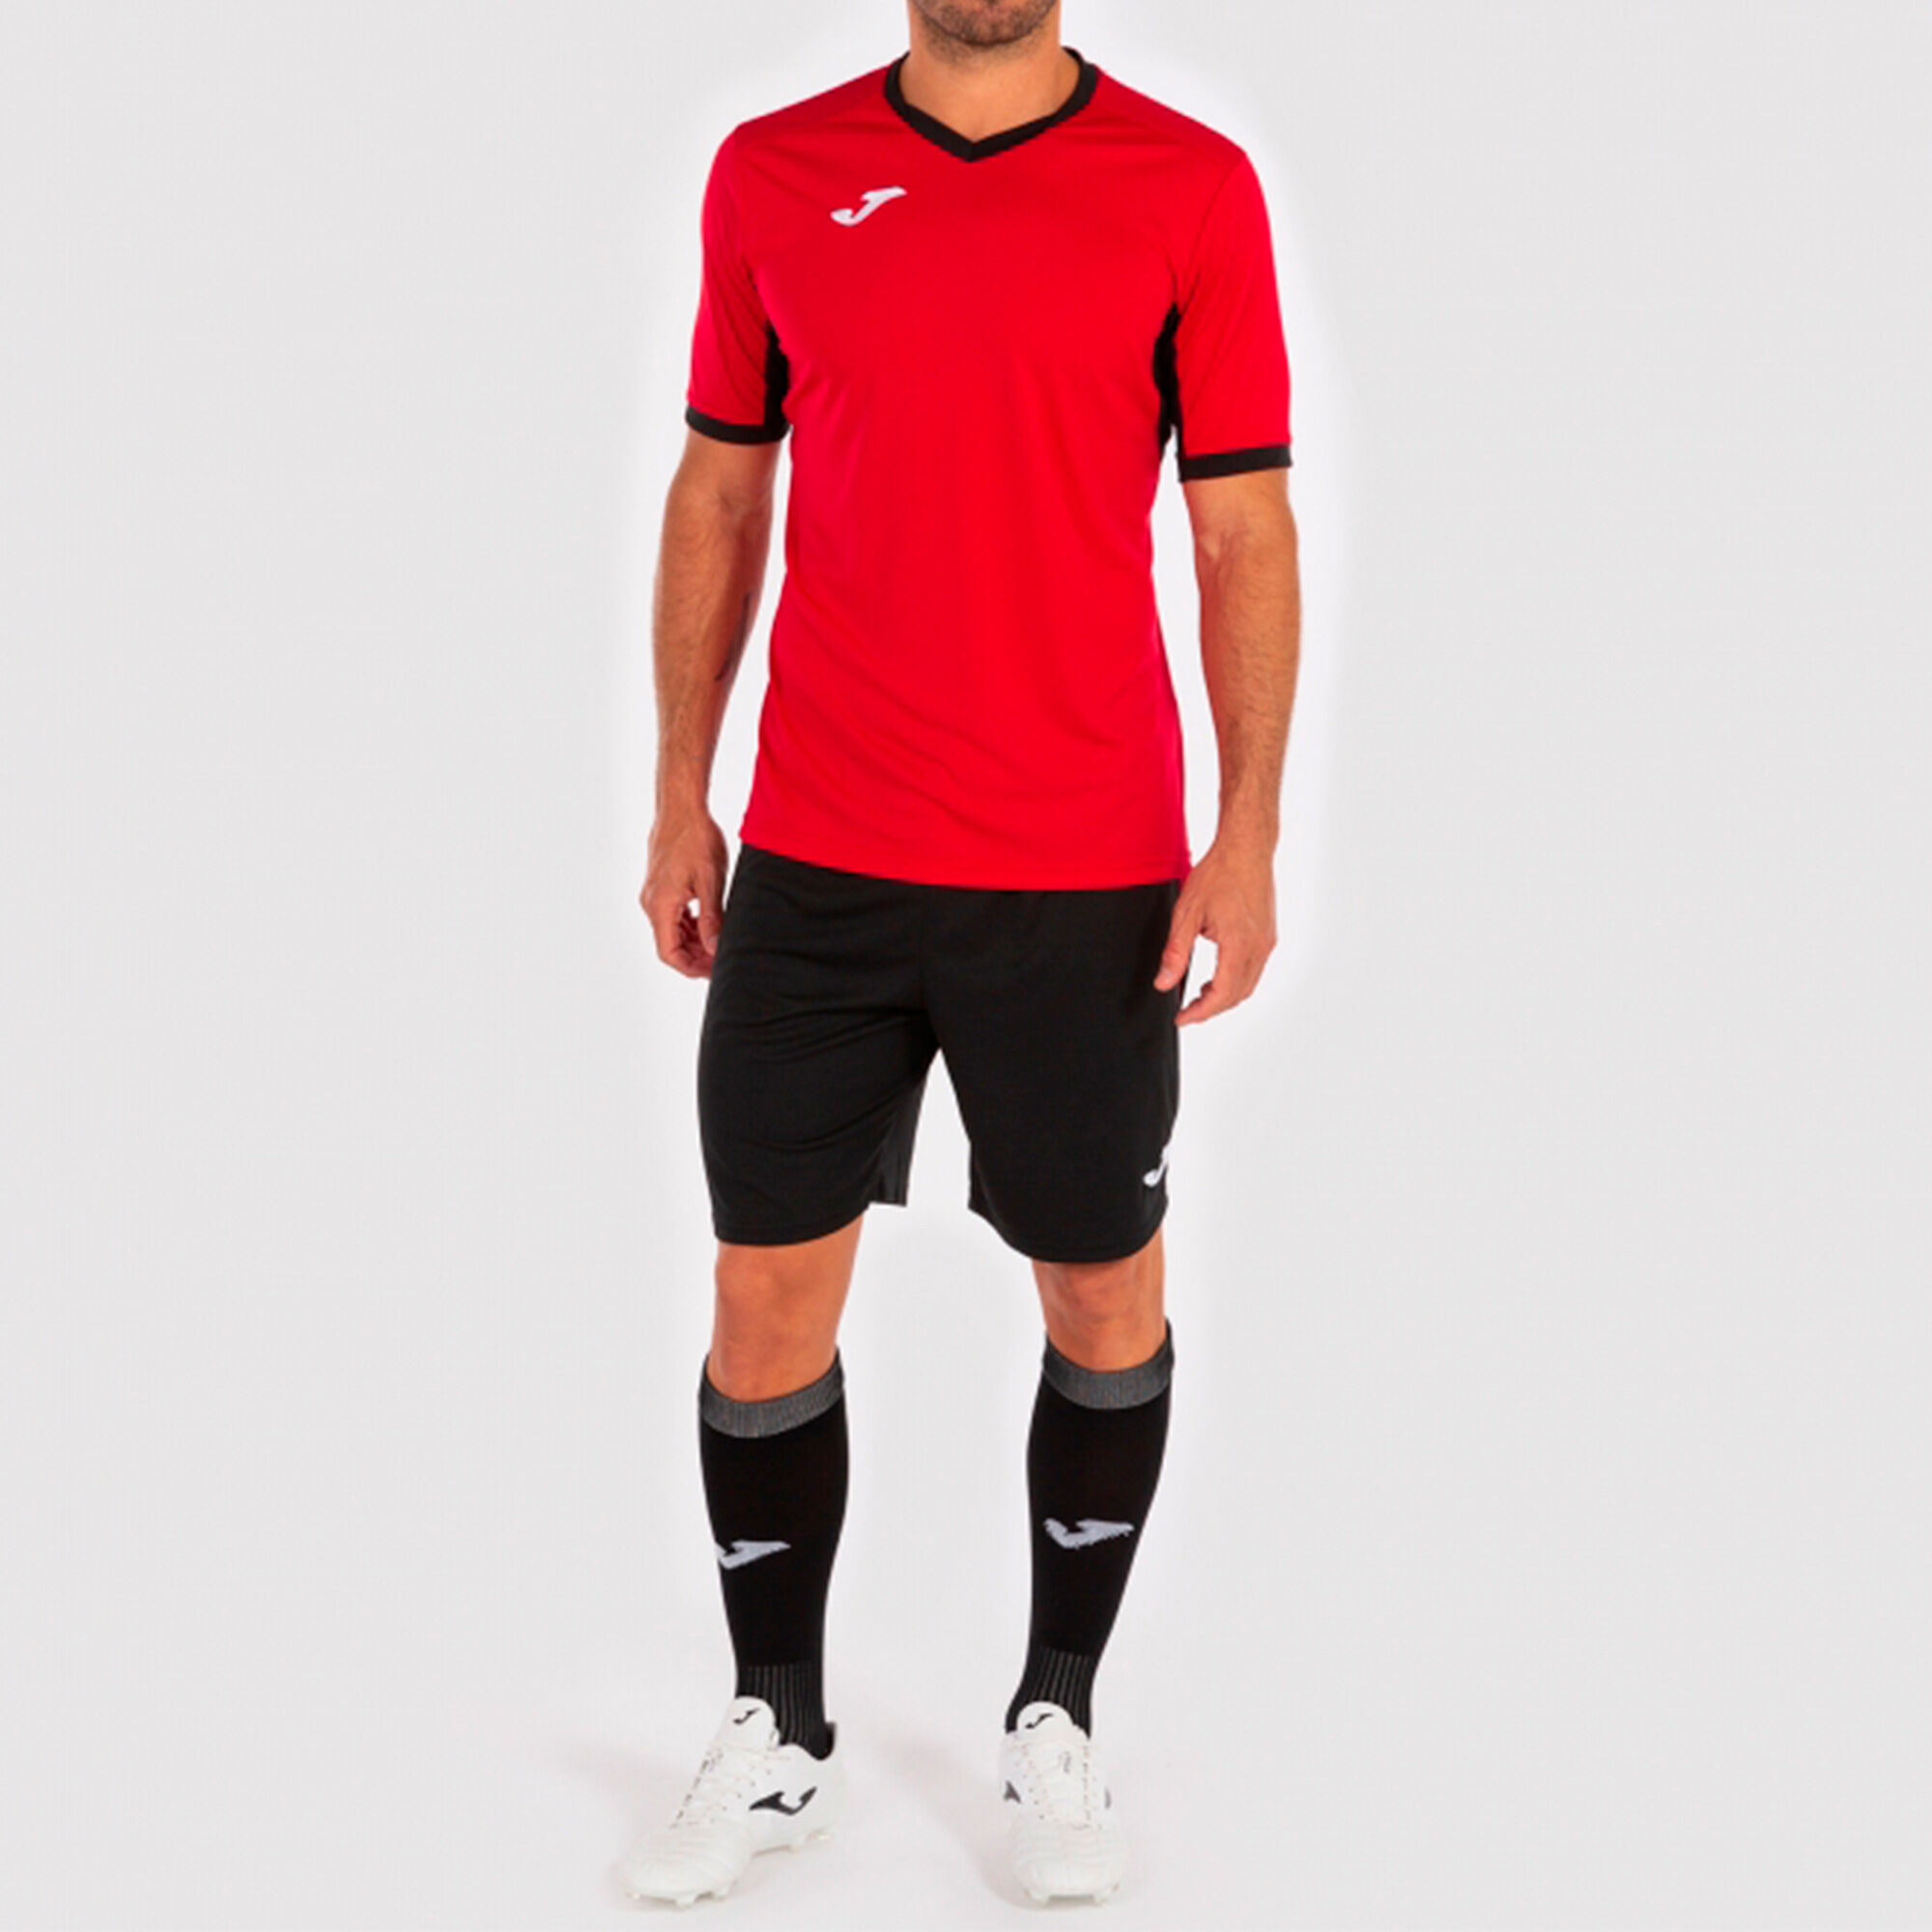 Joma Championship VI Camiseta, Hombre, Rojo-Negro, M